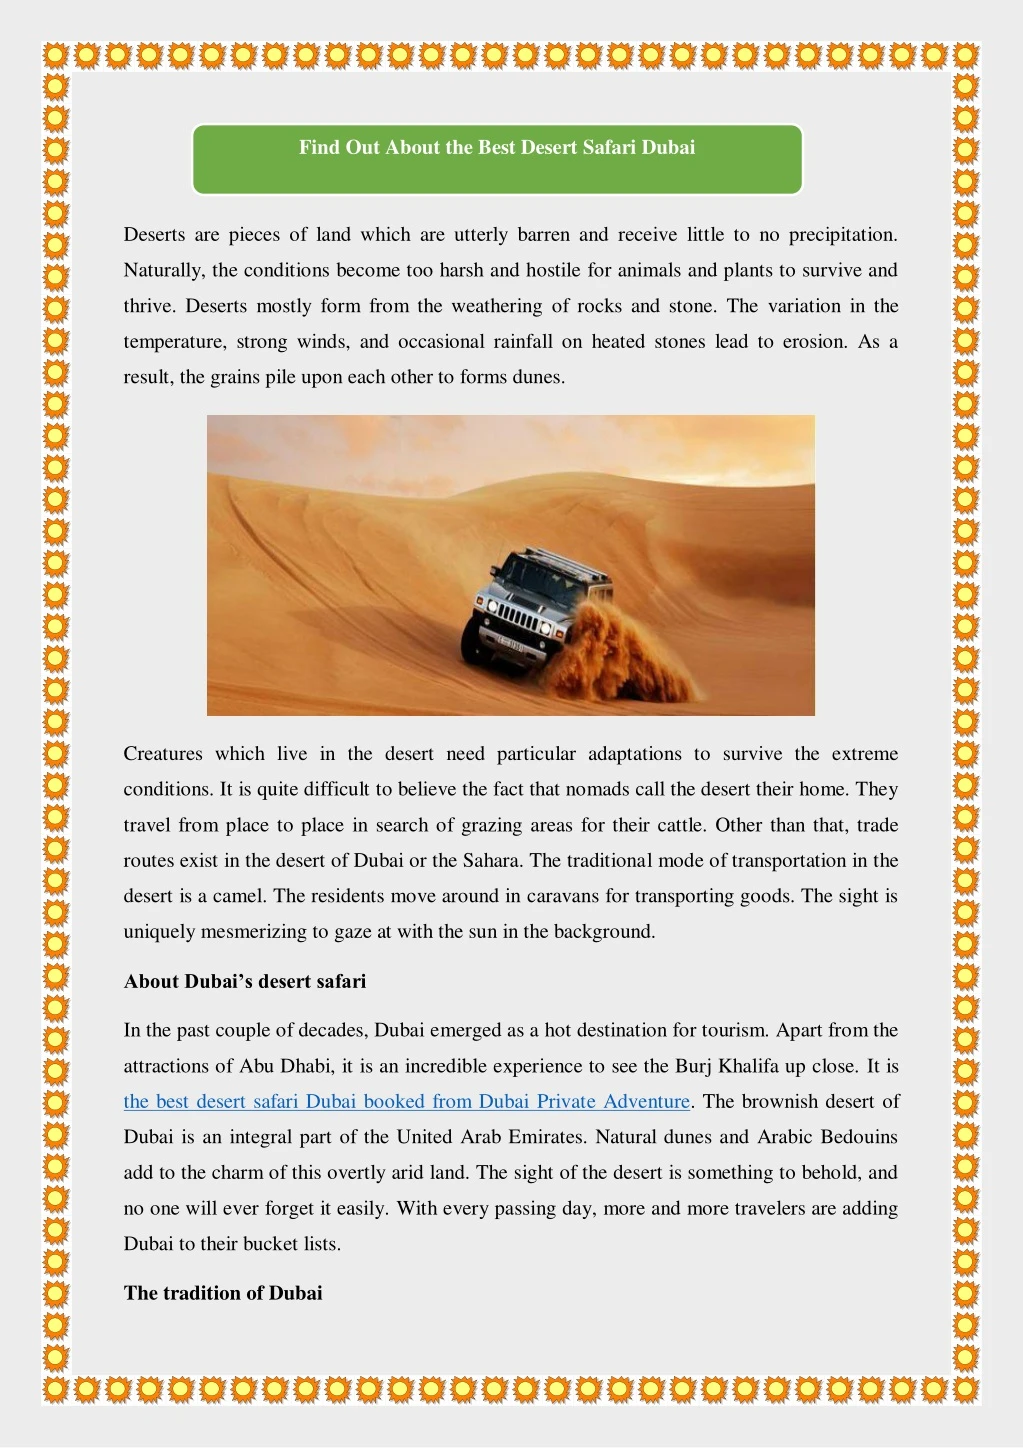 find out about the best desert safari dubai